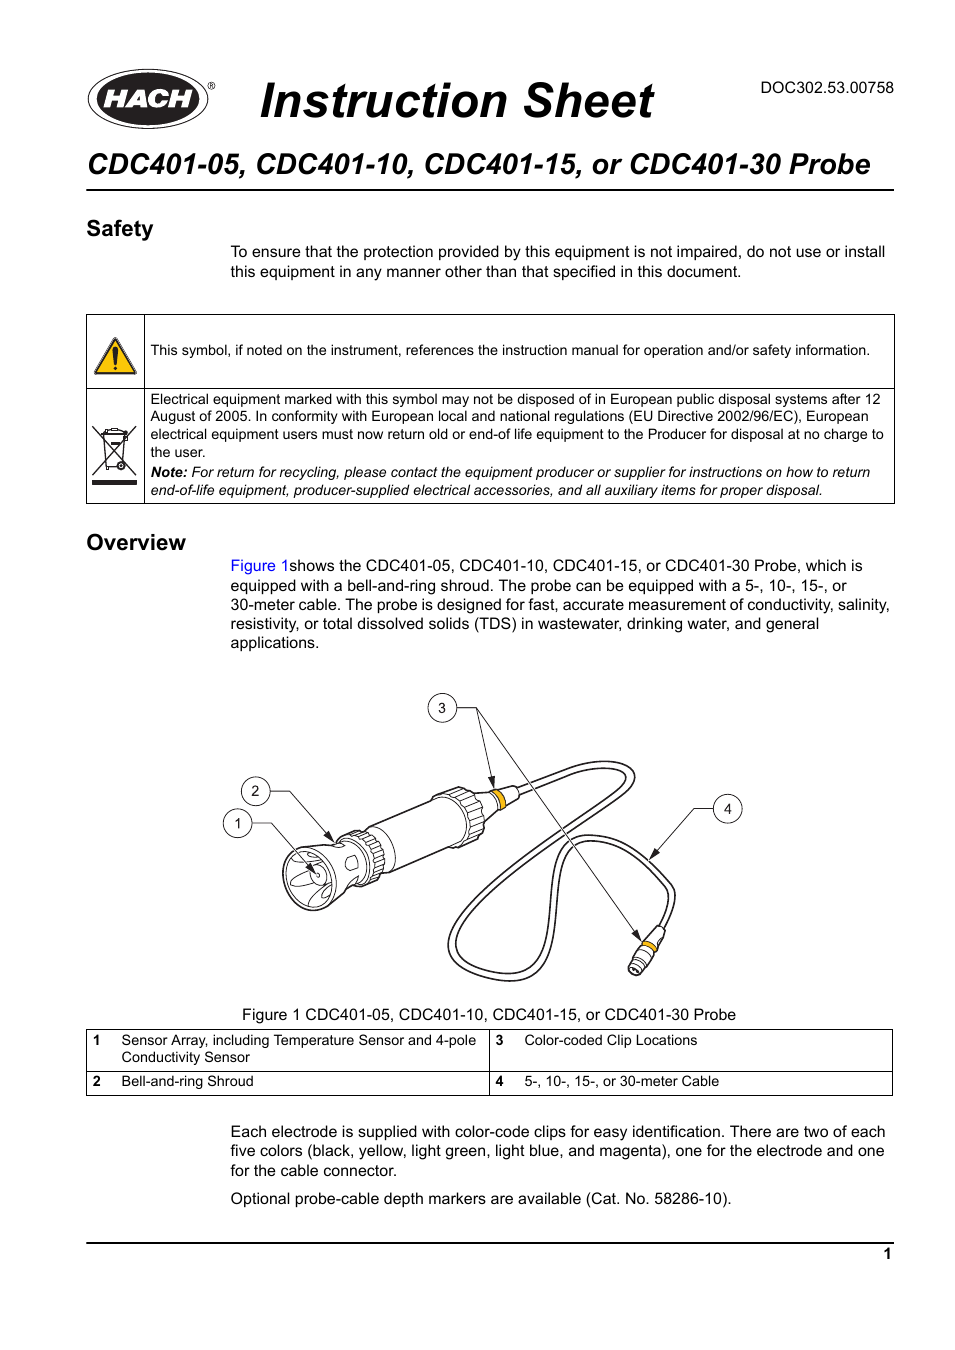 CDC401-10 Instruction Sheet